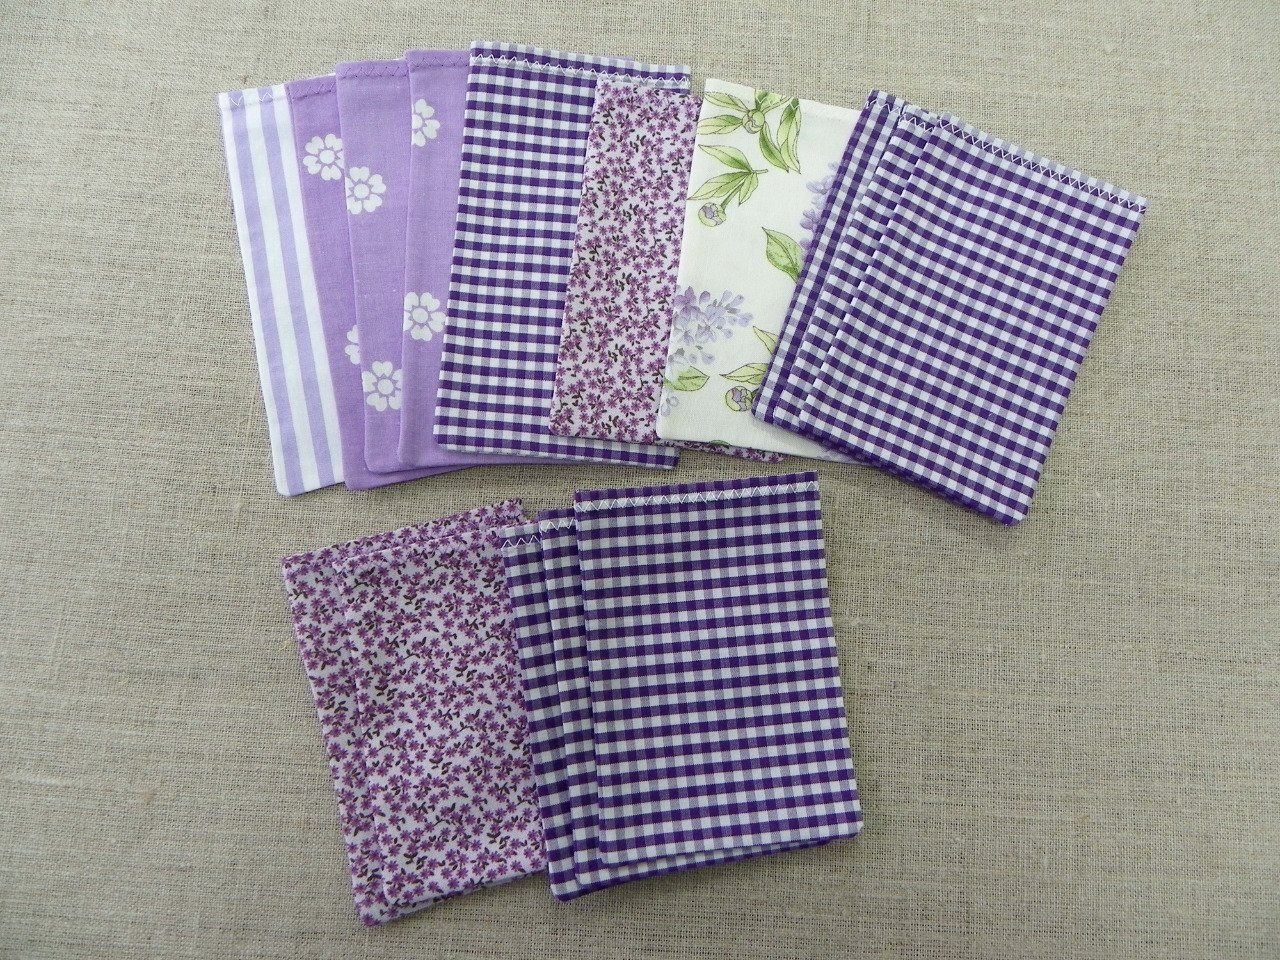 Pochons pochette sachets sac à lavande vide VRAC mauve violet fleuri vichy tissu recyclé upcyclé